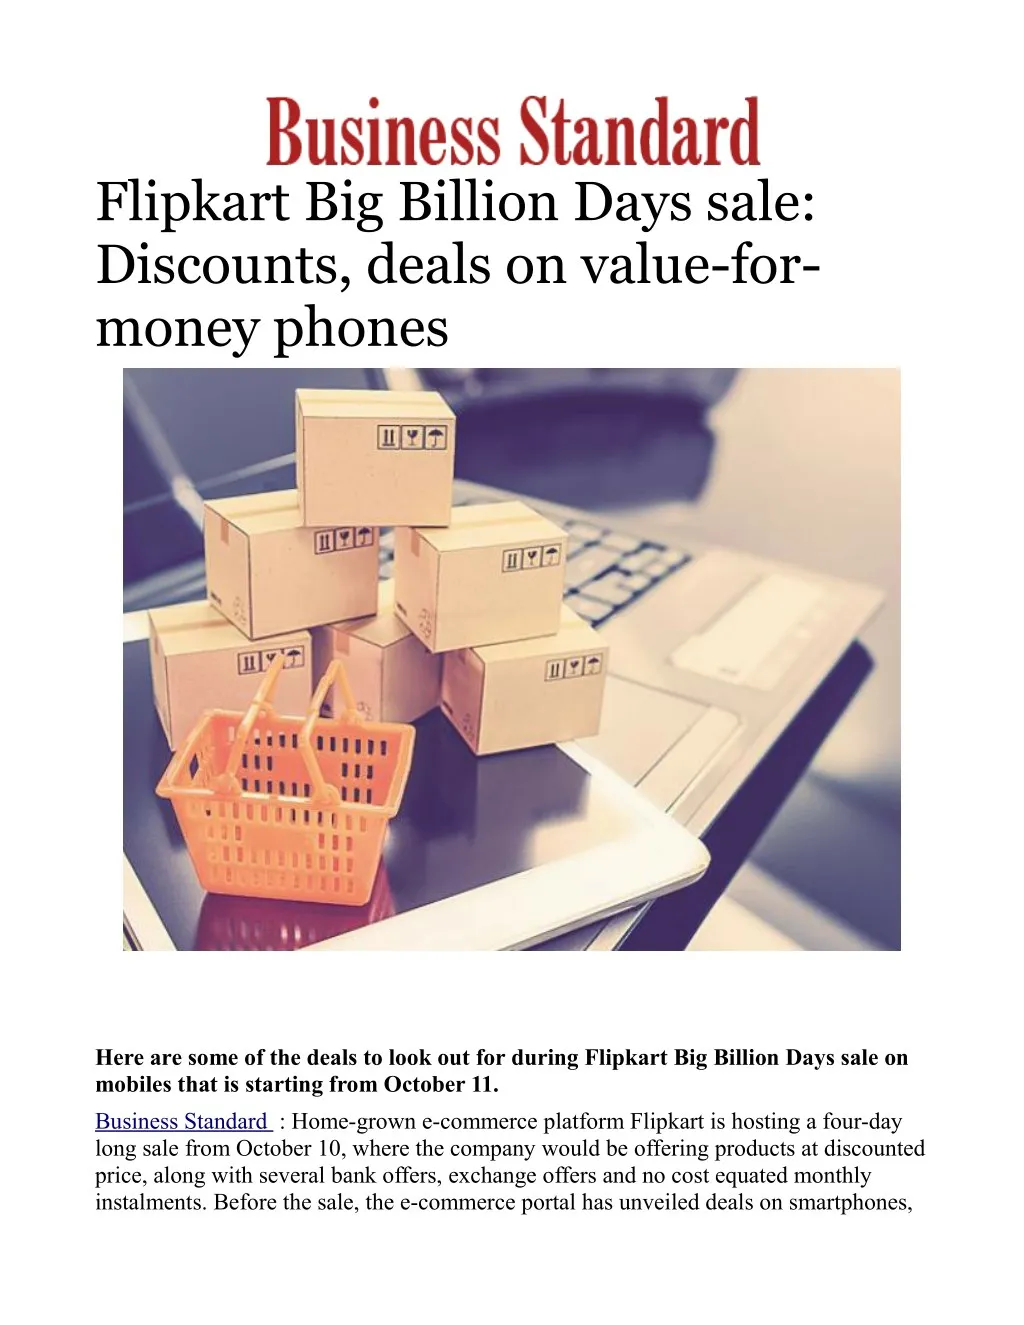 flipkart big billion days sale discounts deals